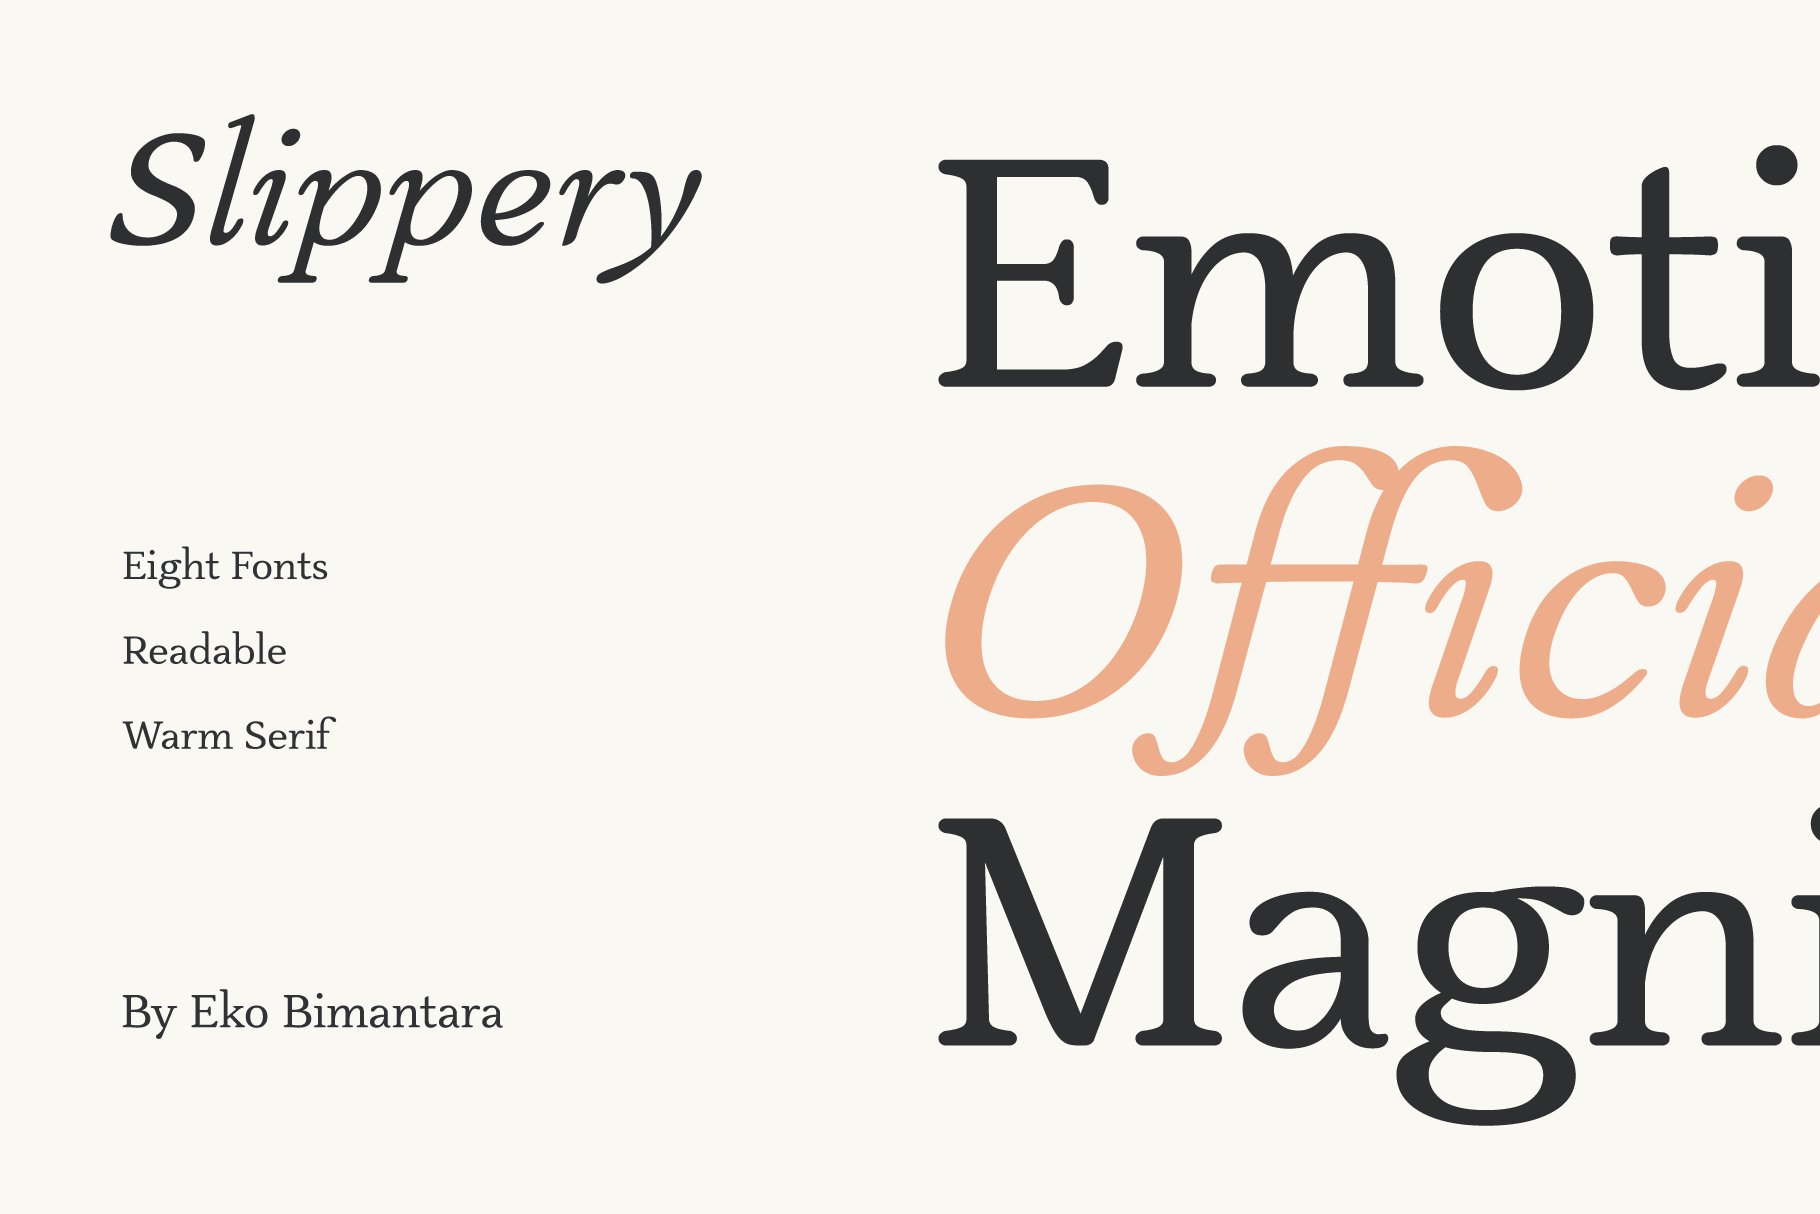 Slippery; Warm Serif cover image.